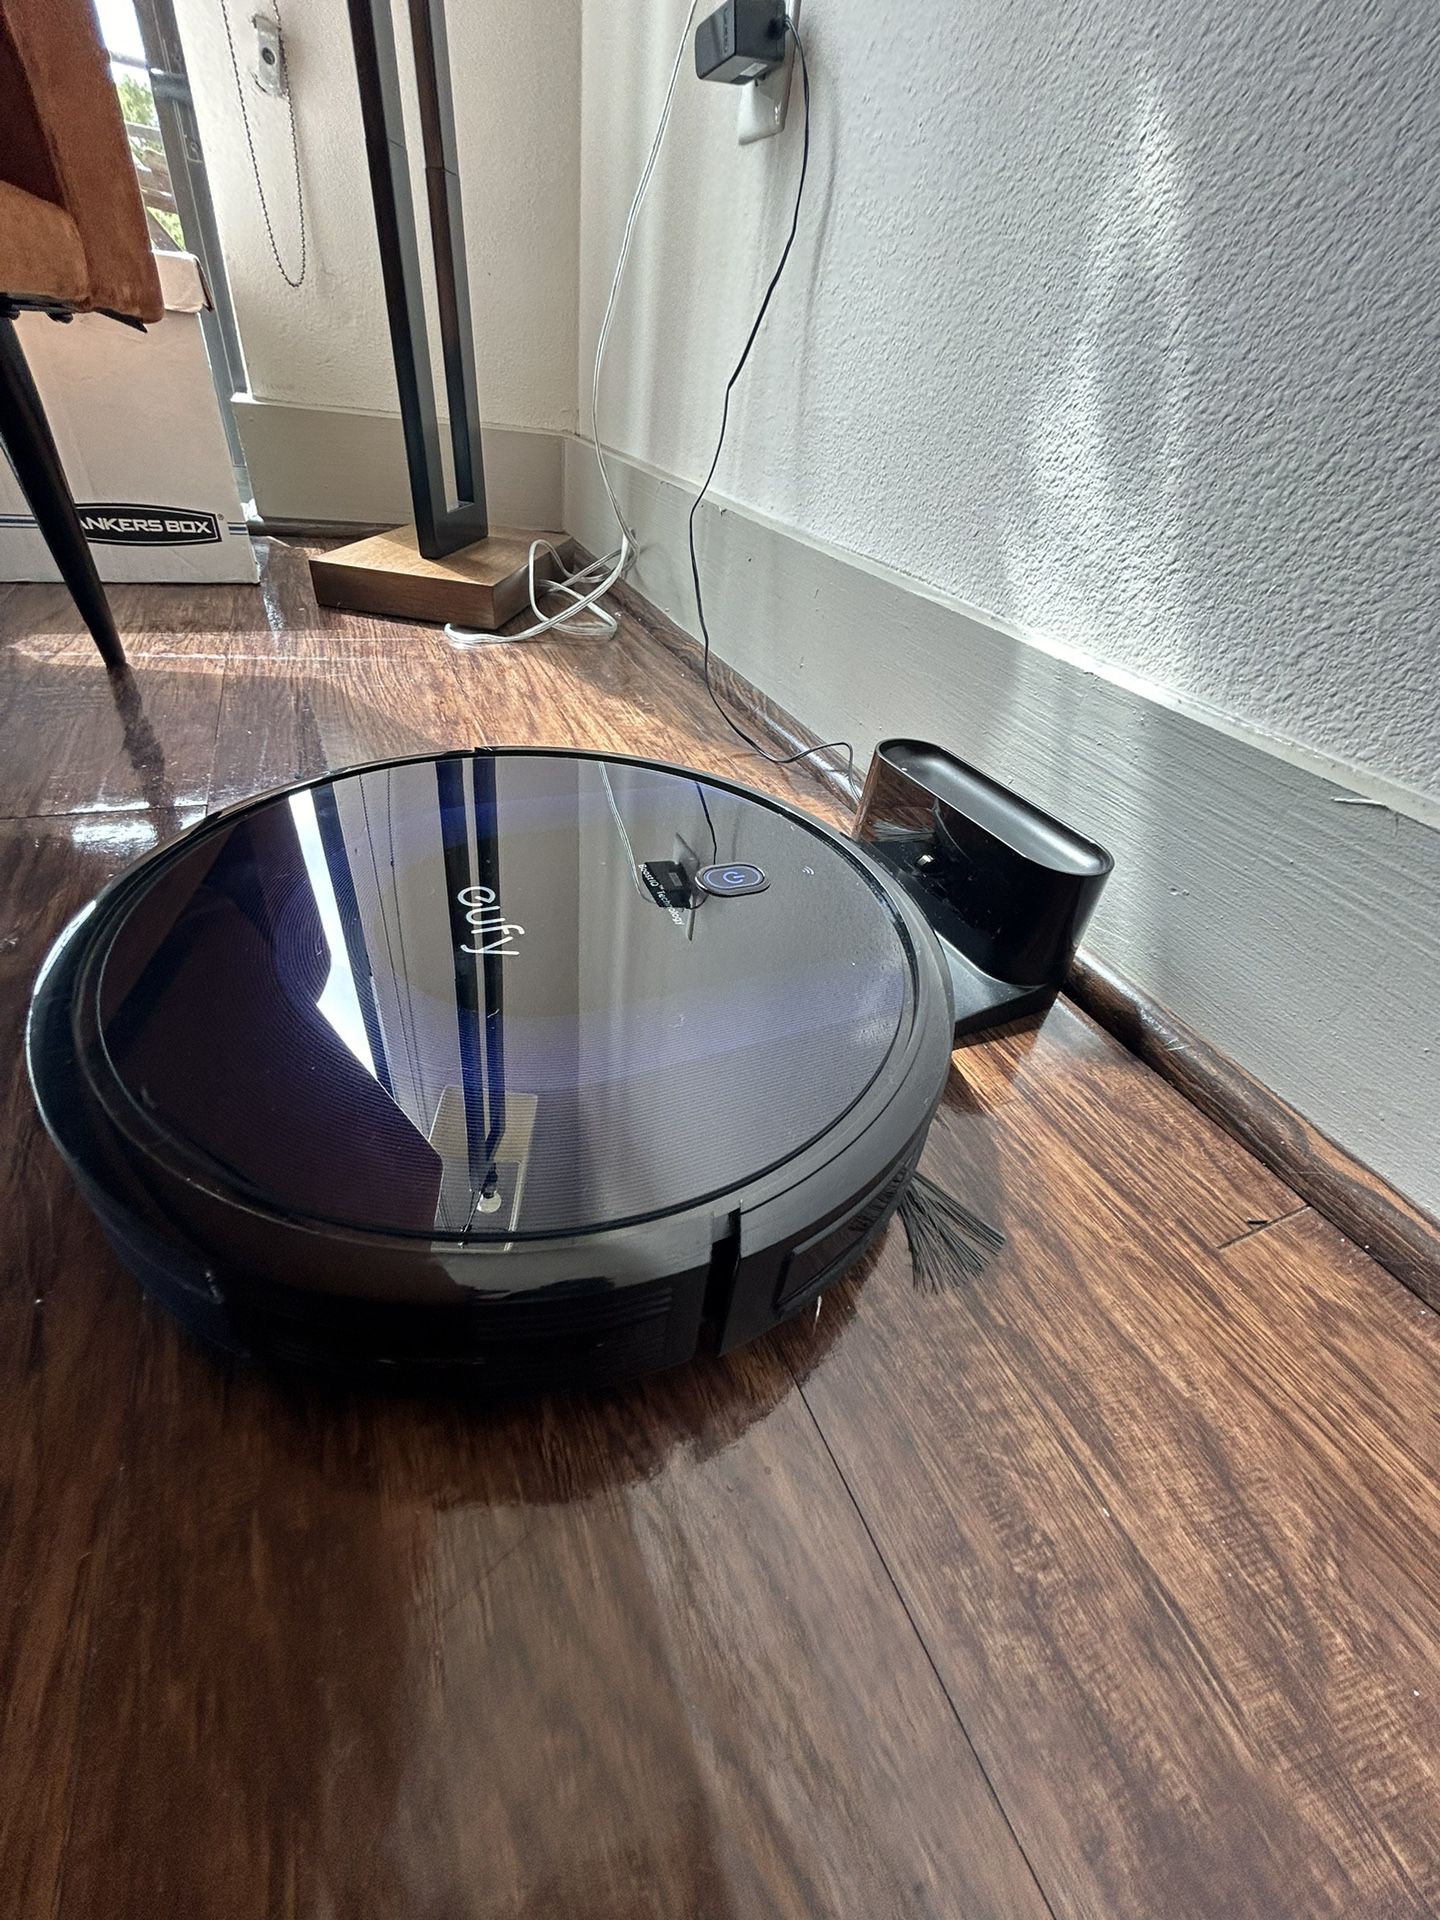 Eufy robot vacuum cleaner